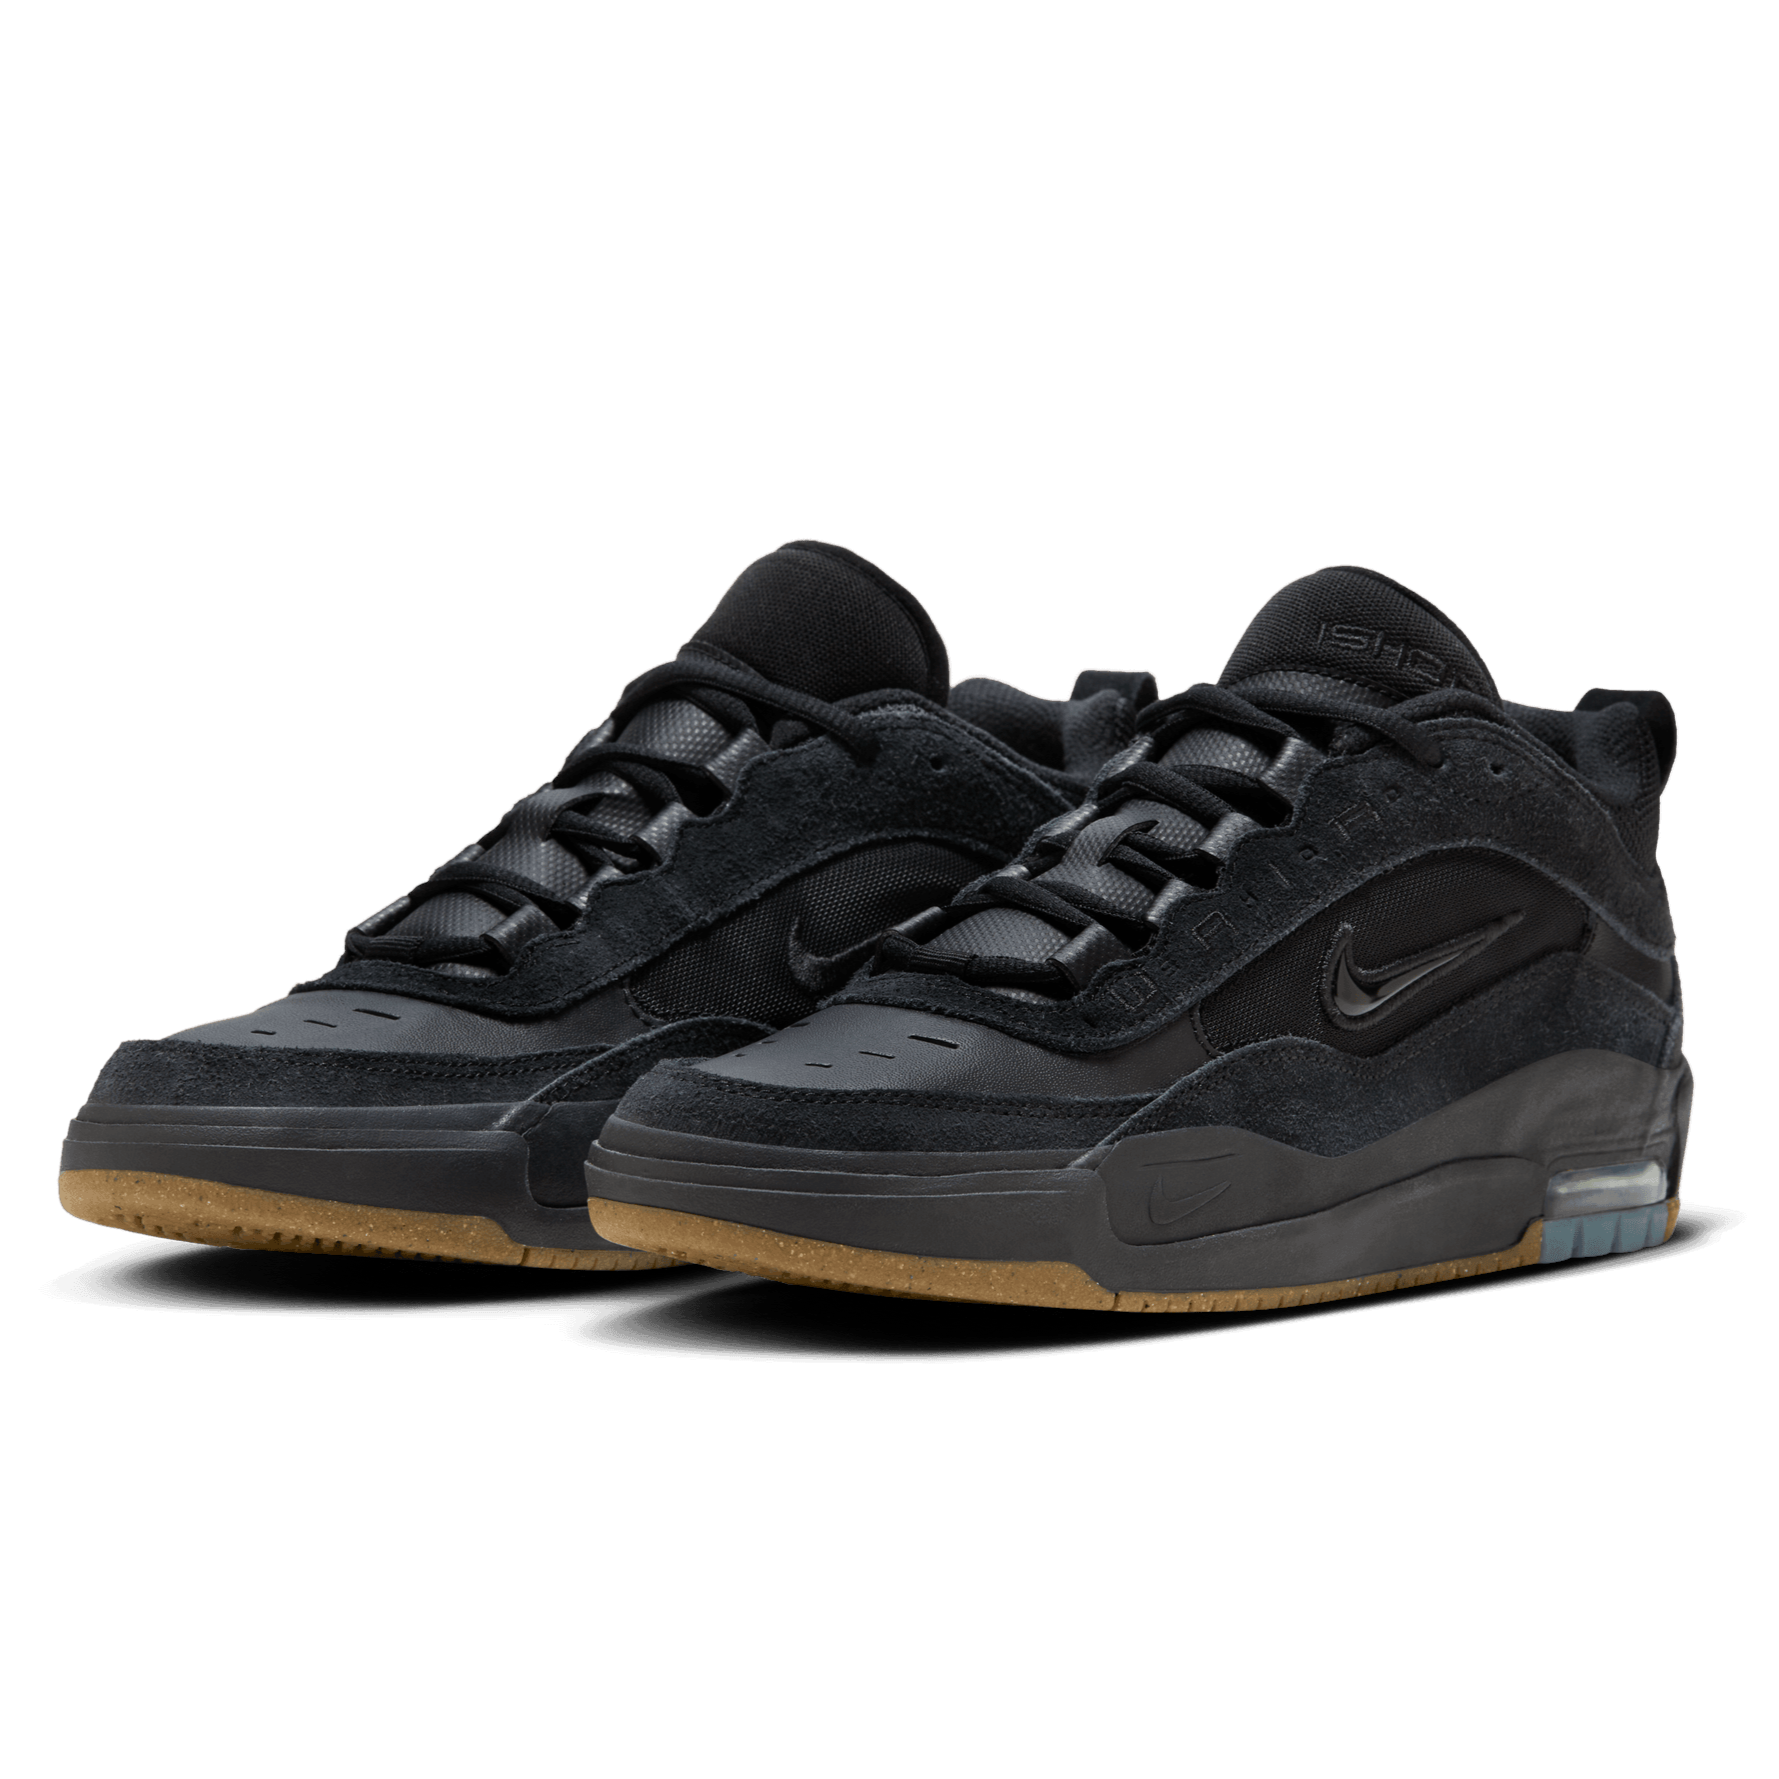 Black/Black Ishod Wair Max 2 Nike SB Shoe Front